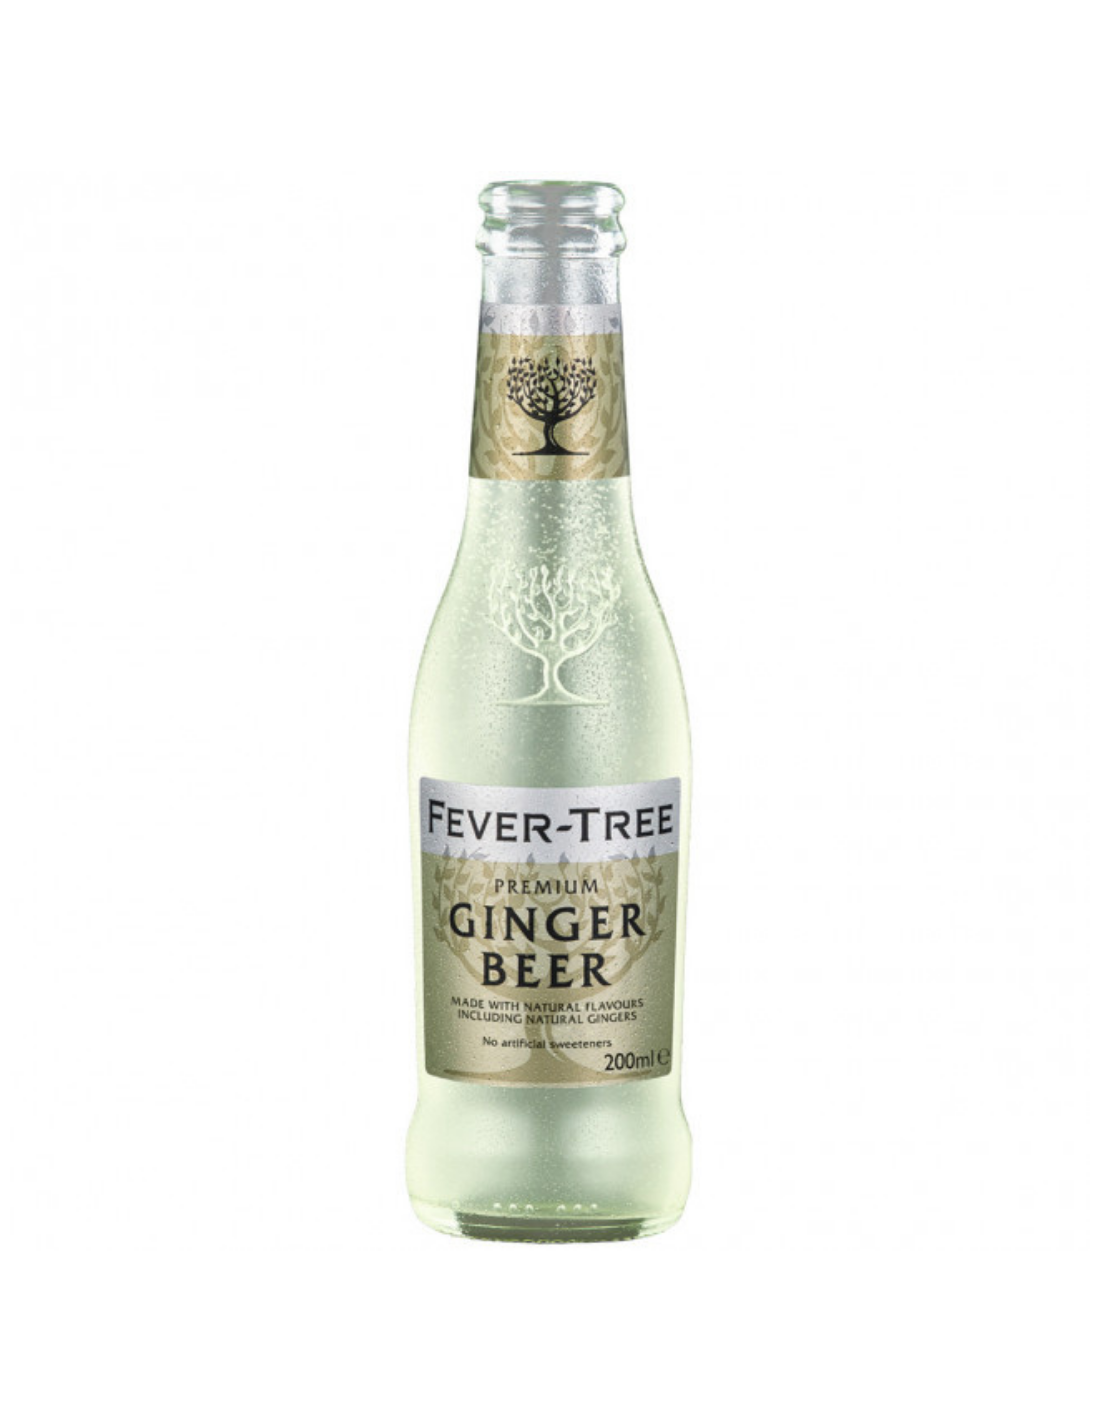 Bautura racoritoare Fever-Tree Ginger Beer, 0.2L, Marea Britanie alcooldiscount.ro